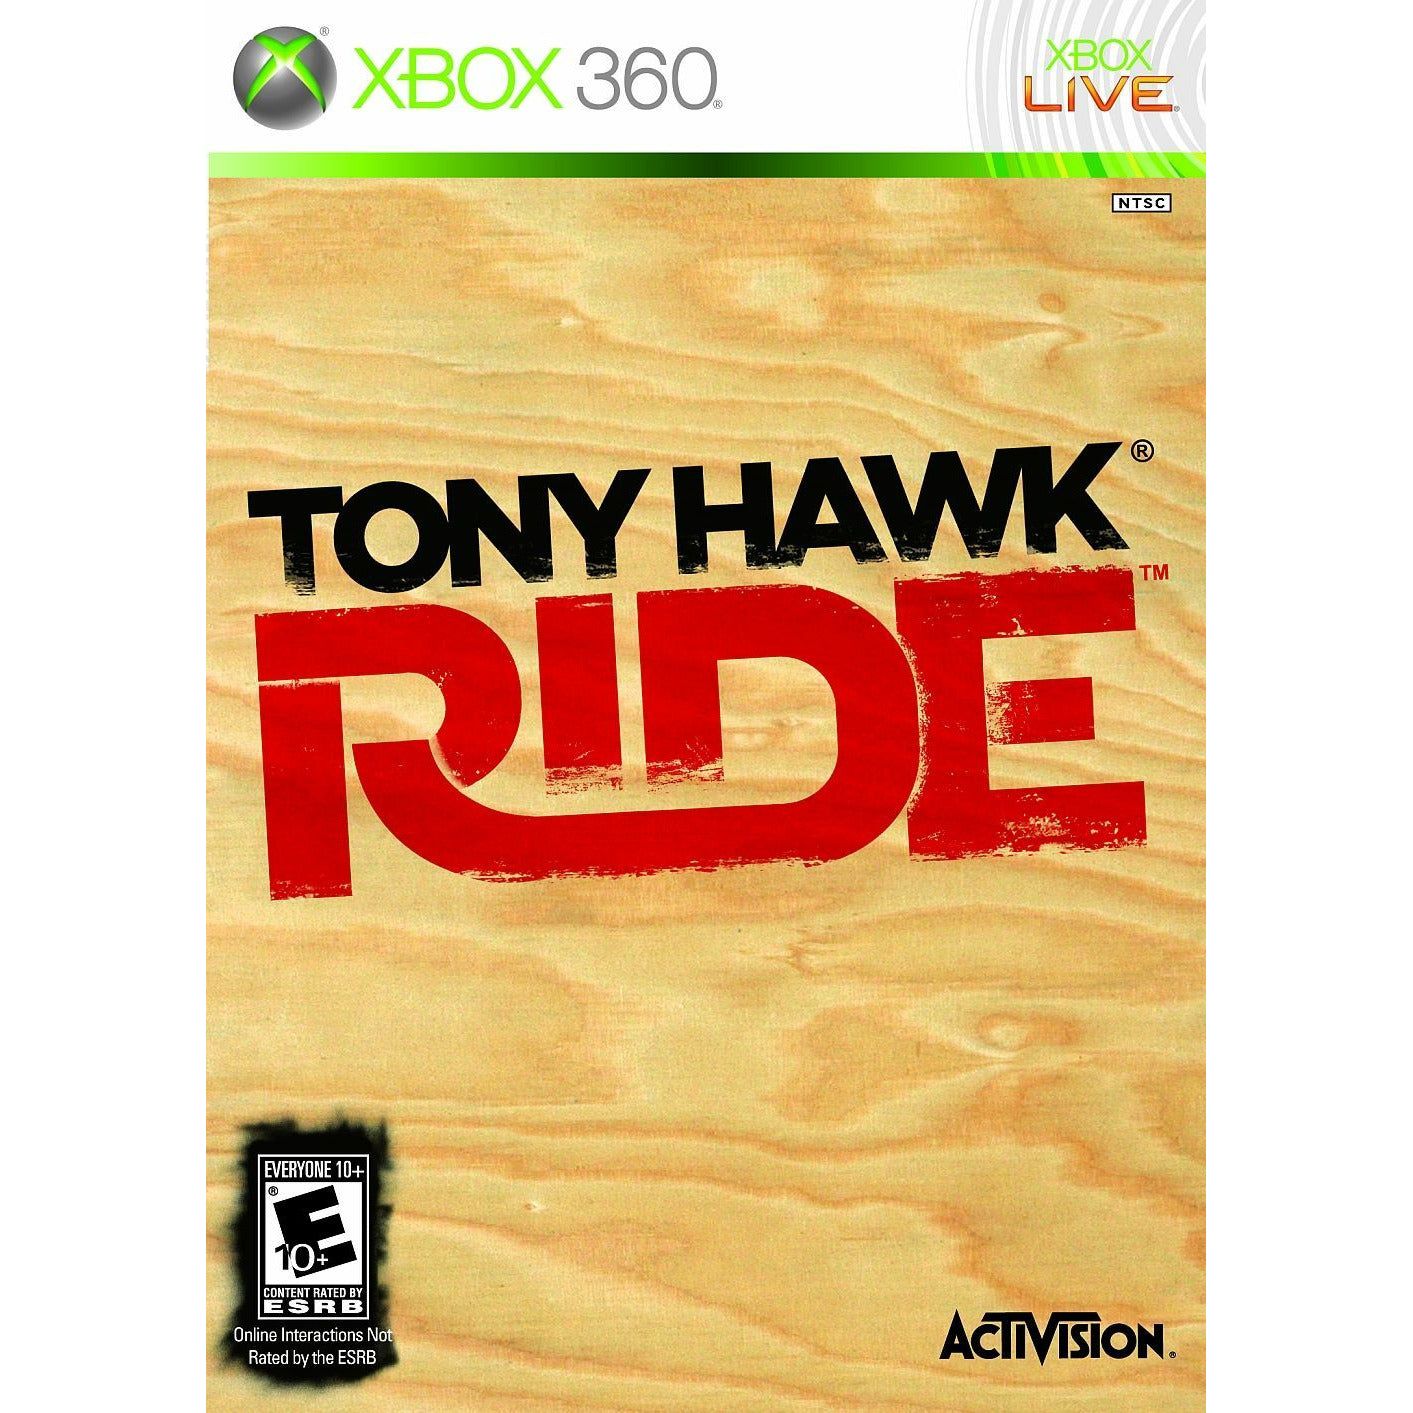 XBOX 360 - Tony Hawk Ride (Requires SkateBoard)